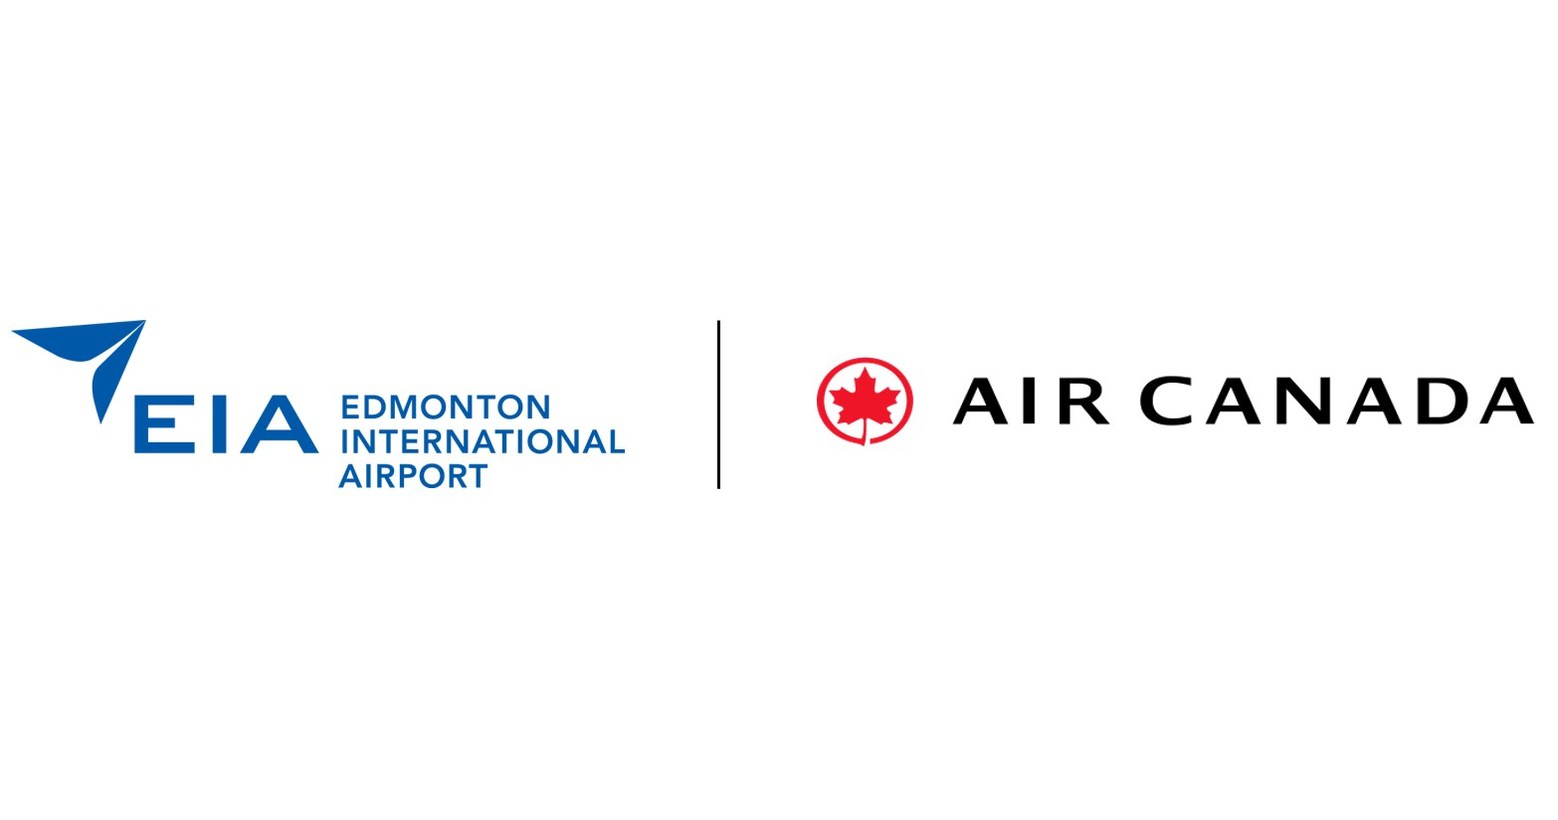 Edmonton International Airport And Air Canada Form Landmark Green Partnership